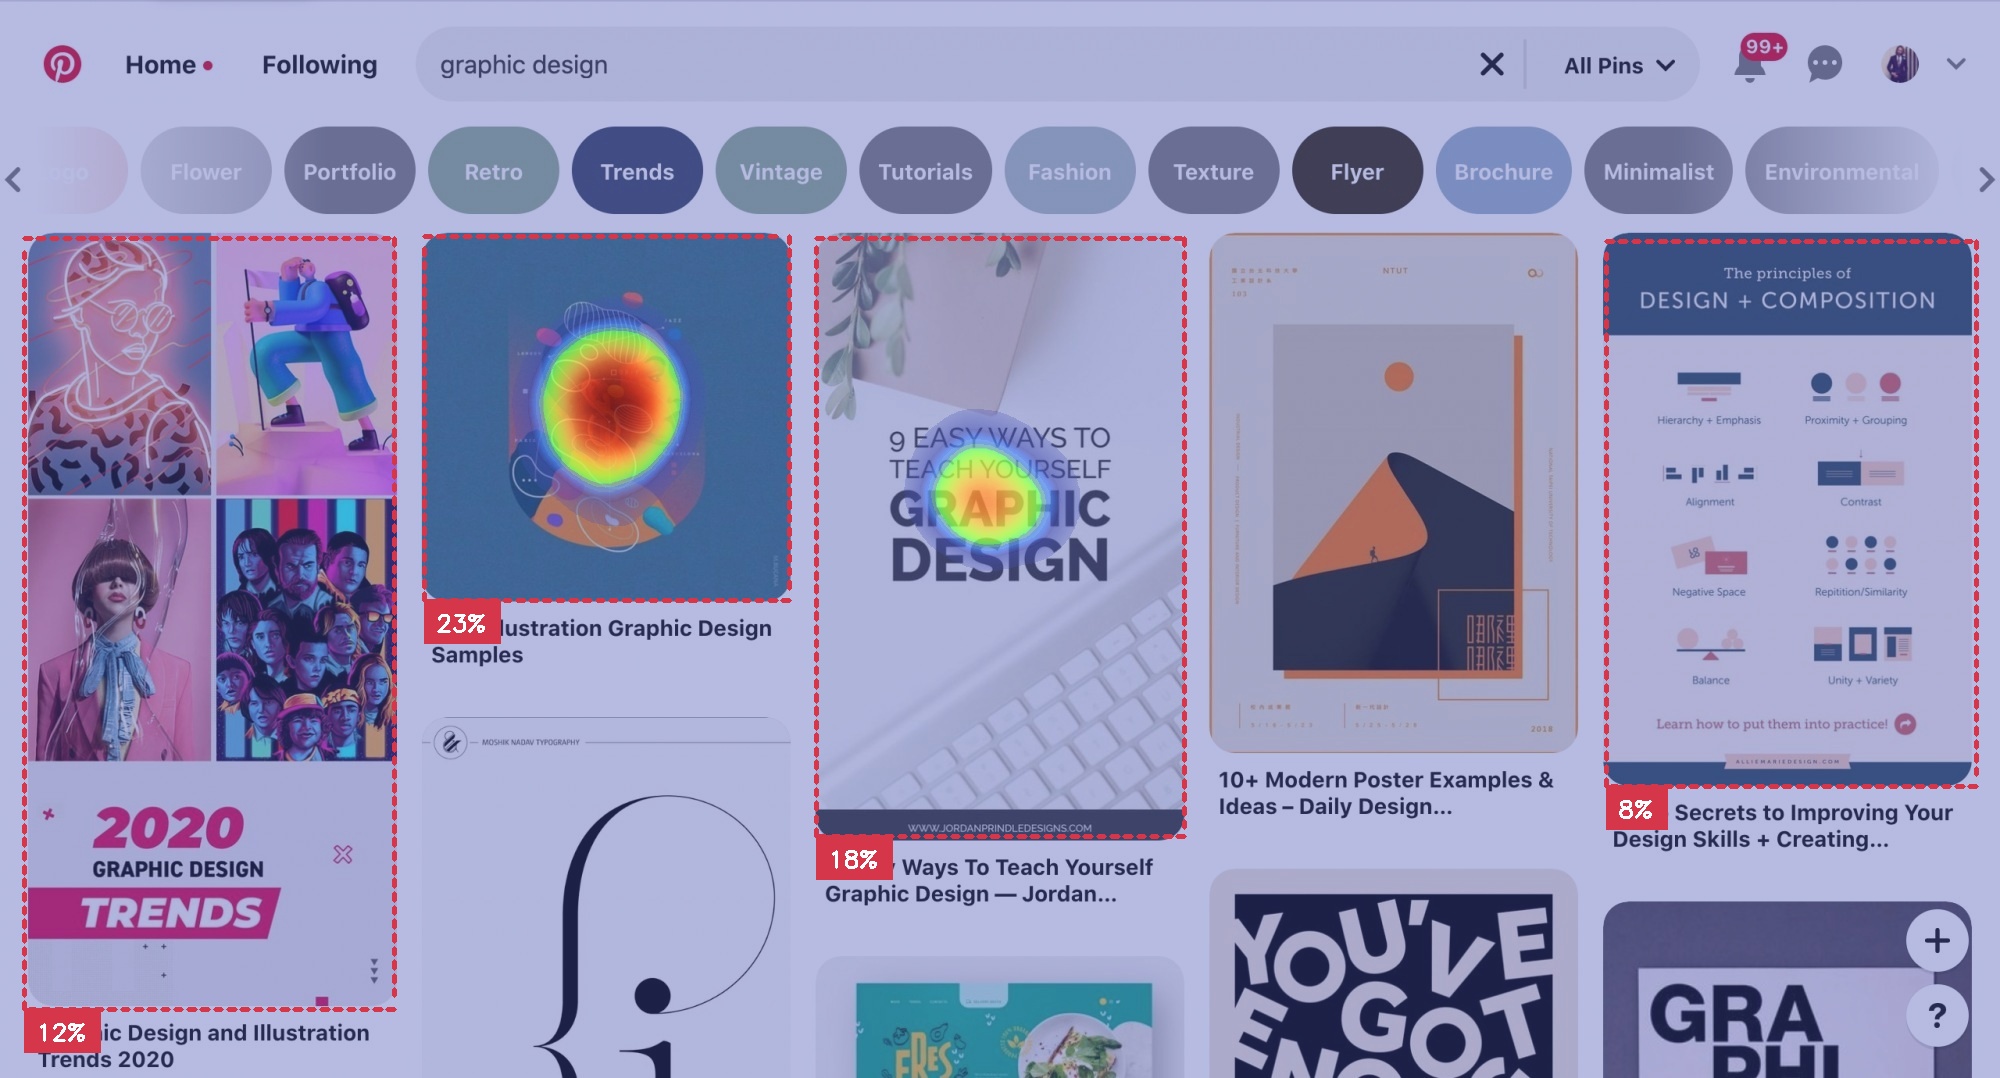 heatmap of Pinterest's layout mosaic balance